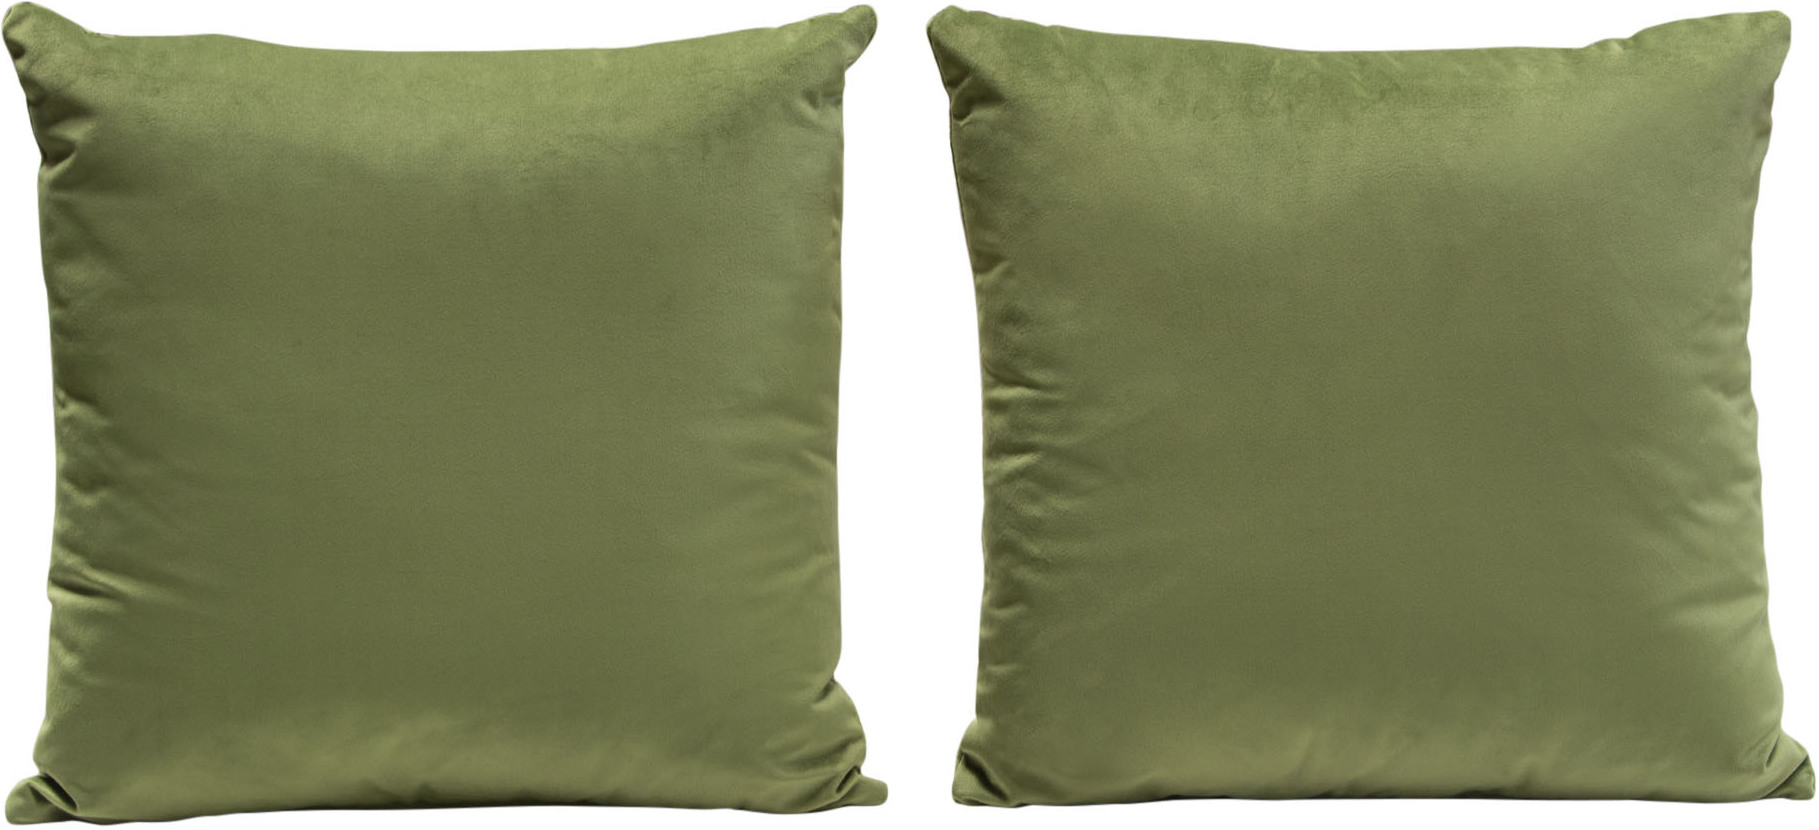 https://cdn.1stopbedrooms.com/media/i/raw/catalog/product/s/e/set-of-2-16-inch-square-accent-pillows-in-sage-green-velvet_qb13310173.jpg